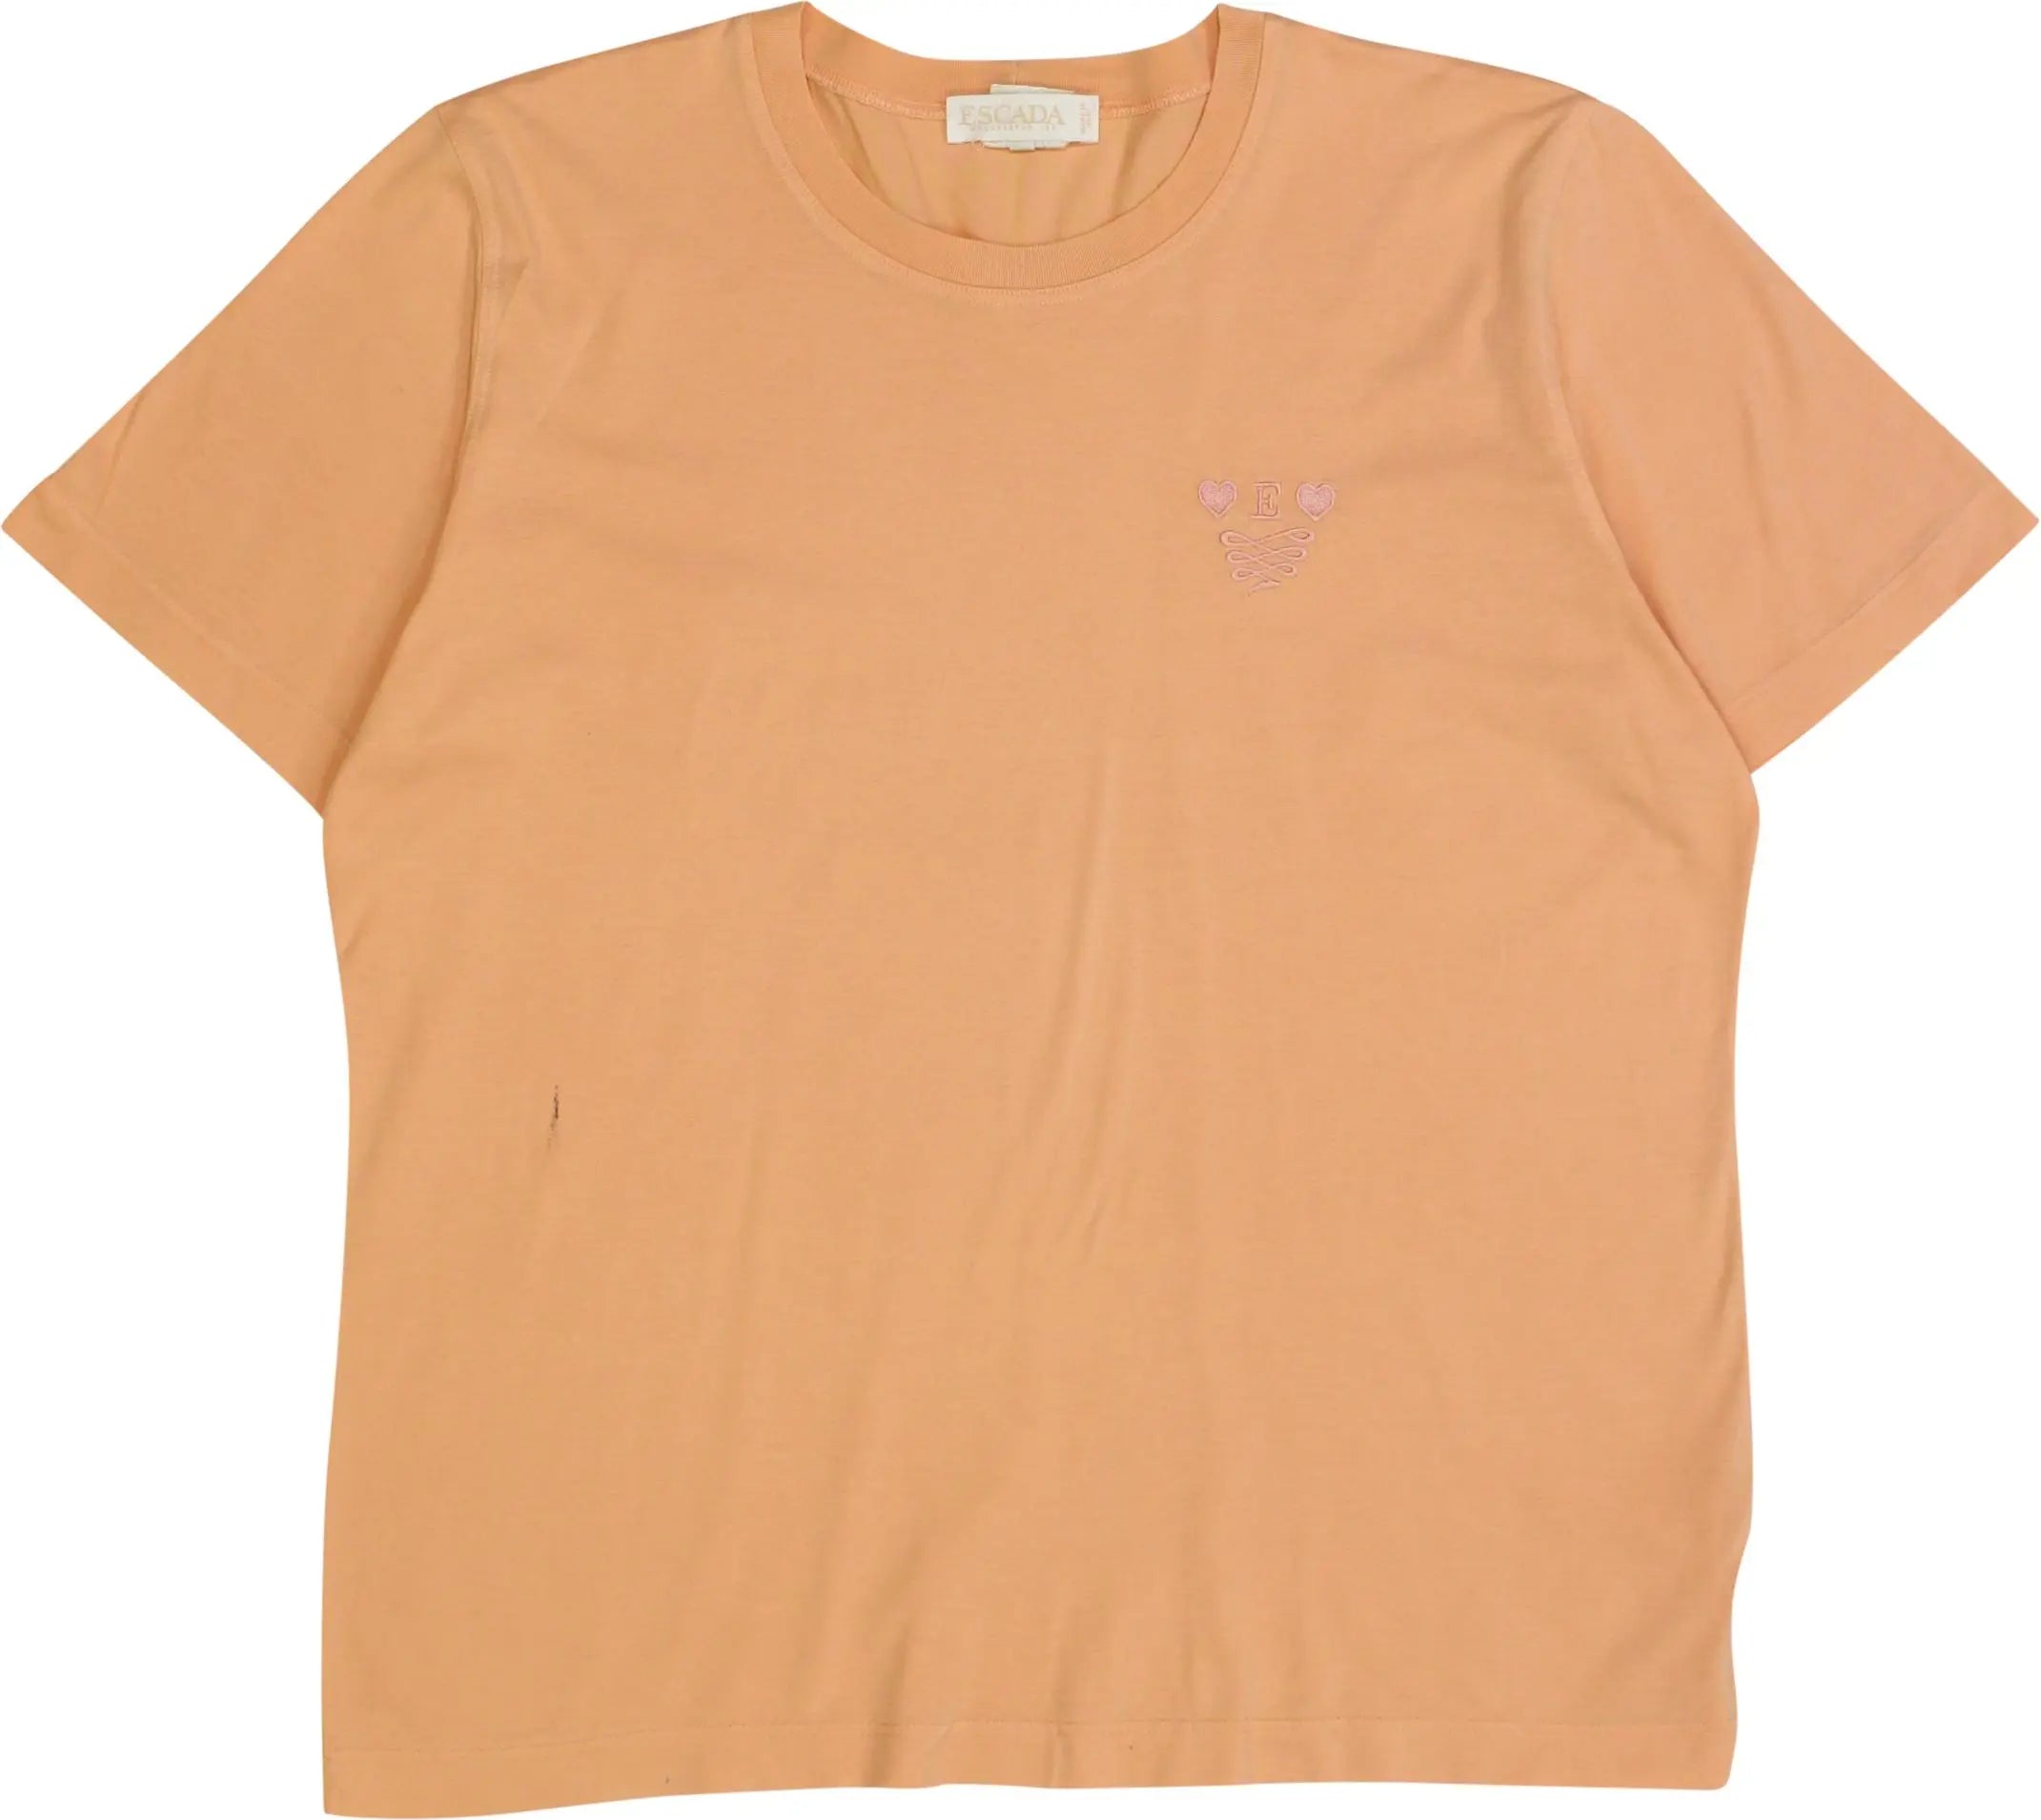 Escada - Pink Escada T-shirt- ThriftTale.com - Vintage and second handclothing